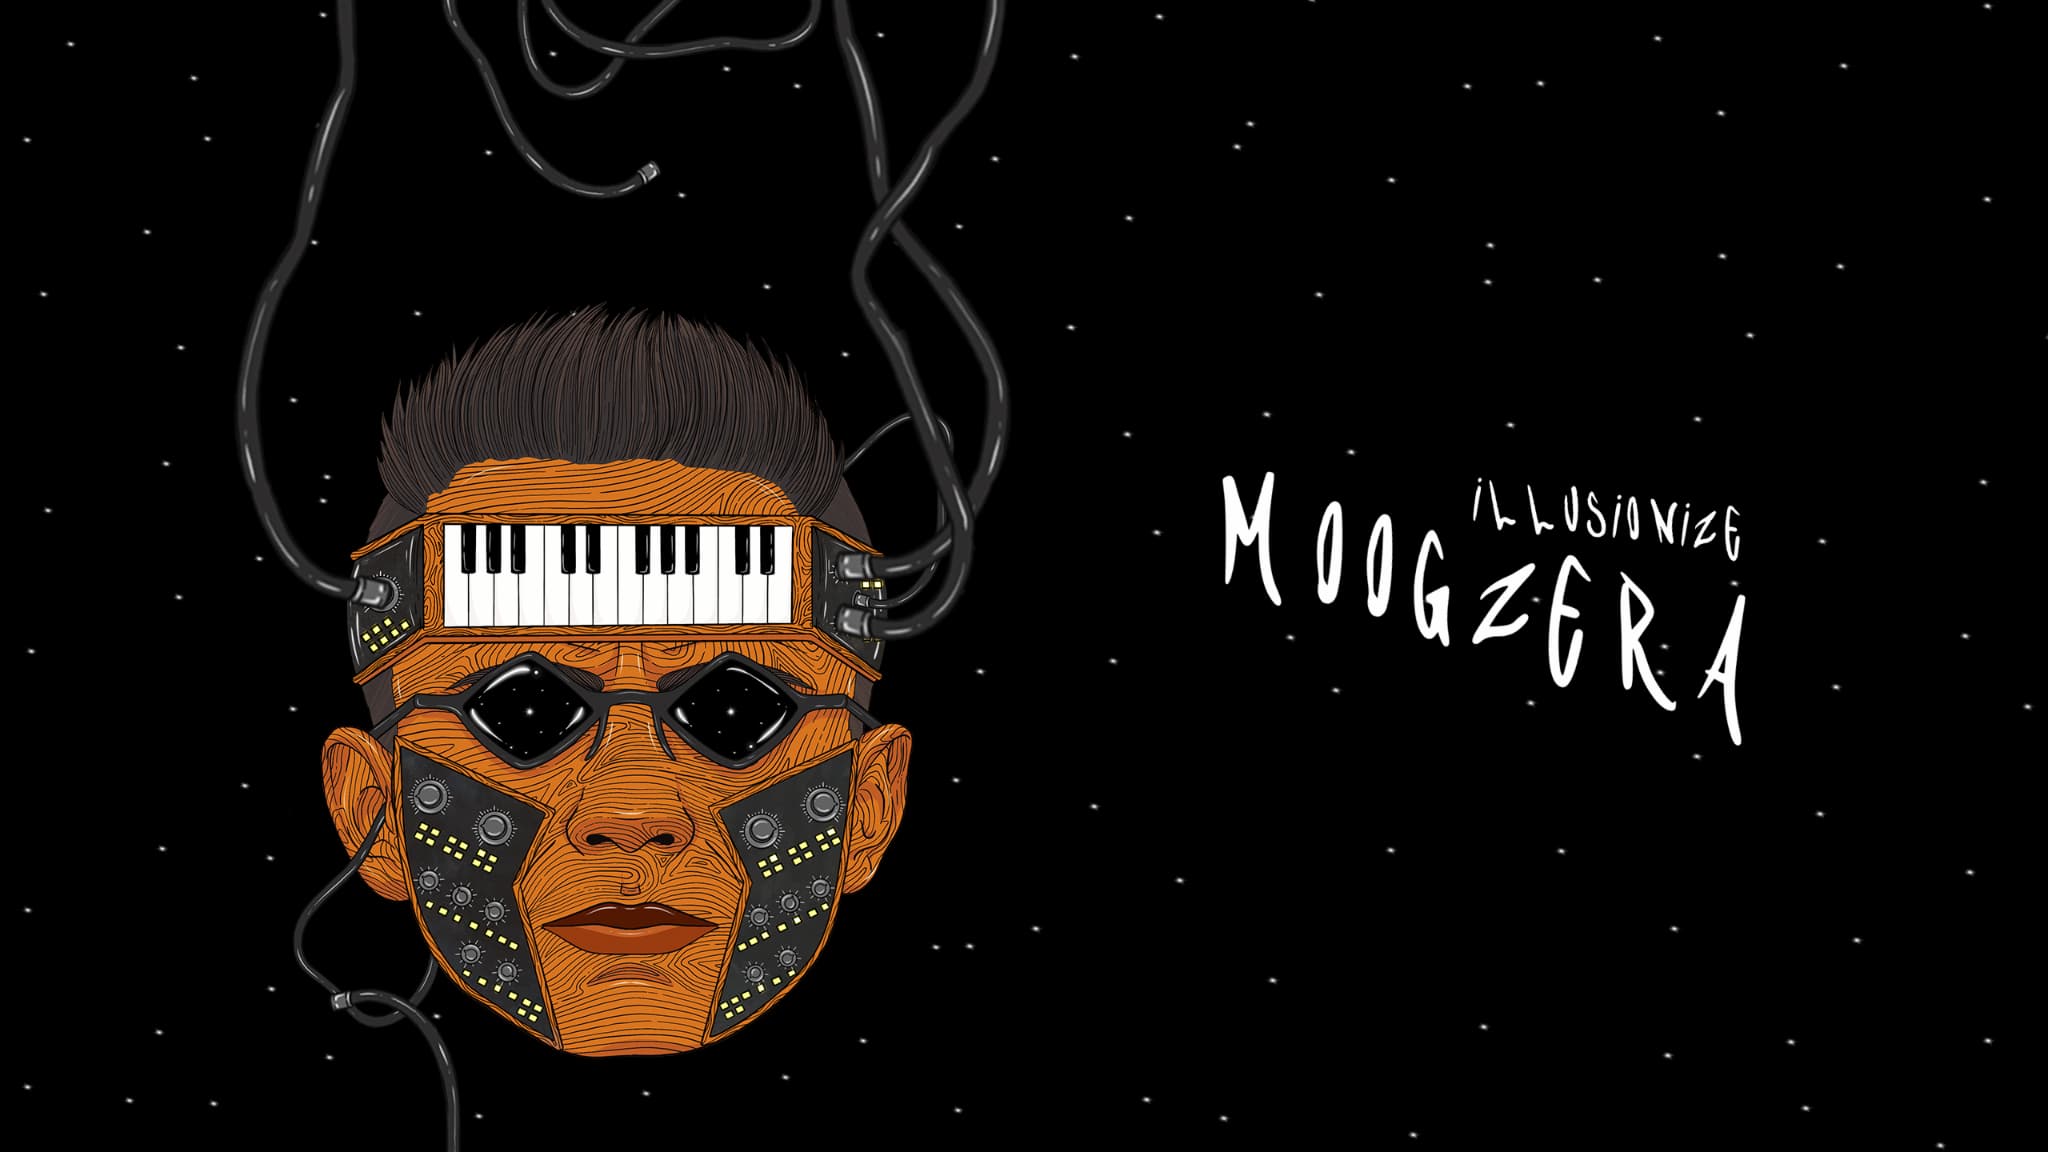 Illusionize apresenta "Moogzera" pela Elevation Music Records